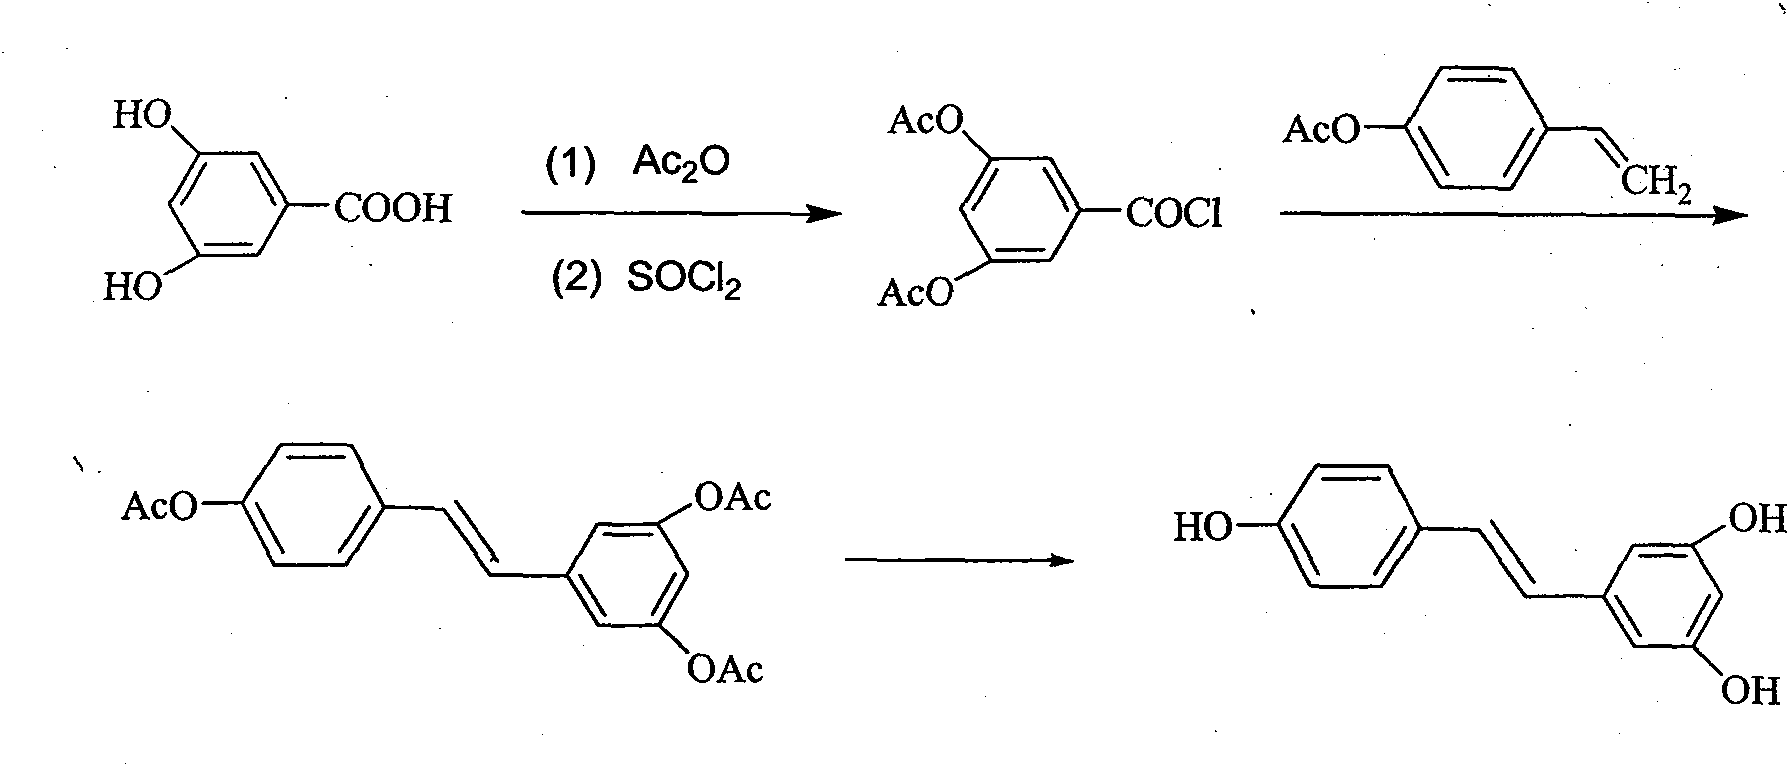 Novel method for preparing resveratrol and derivative thereof through decarbonylation heck reaction